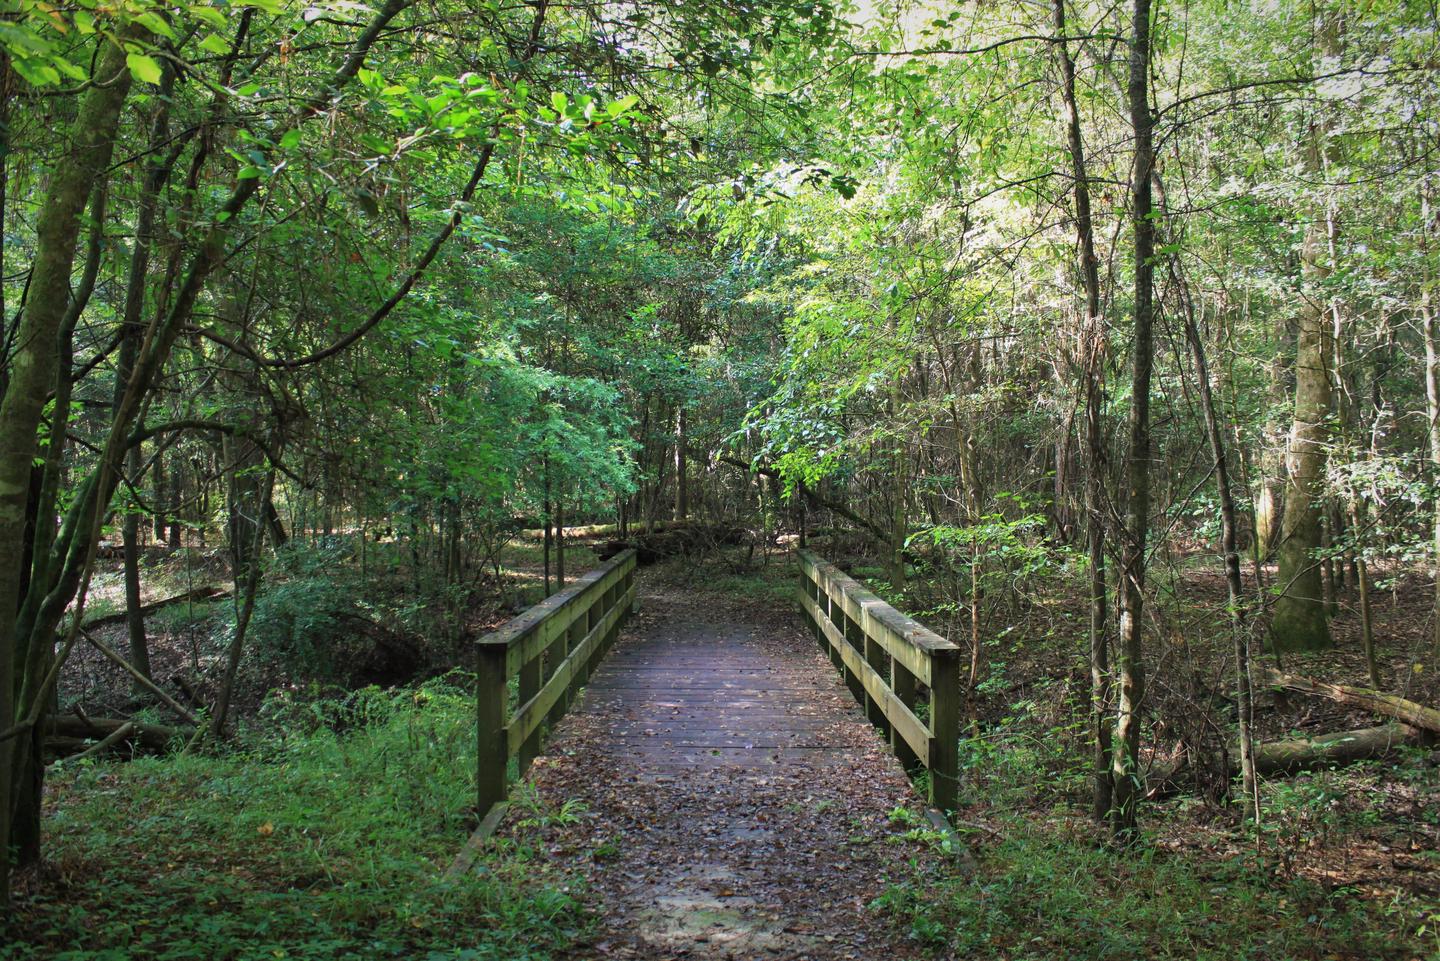 Kirby Nature Trail BridgeSmall wooden bridges guide hikers across waterways on the Kirby Nature Trail.